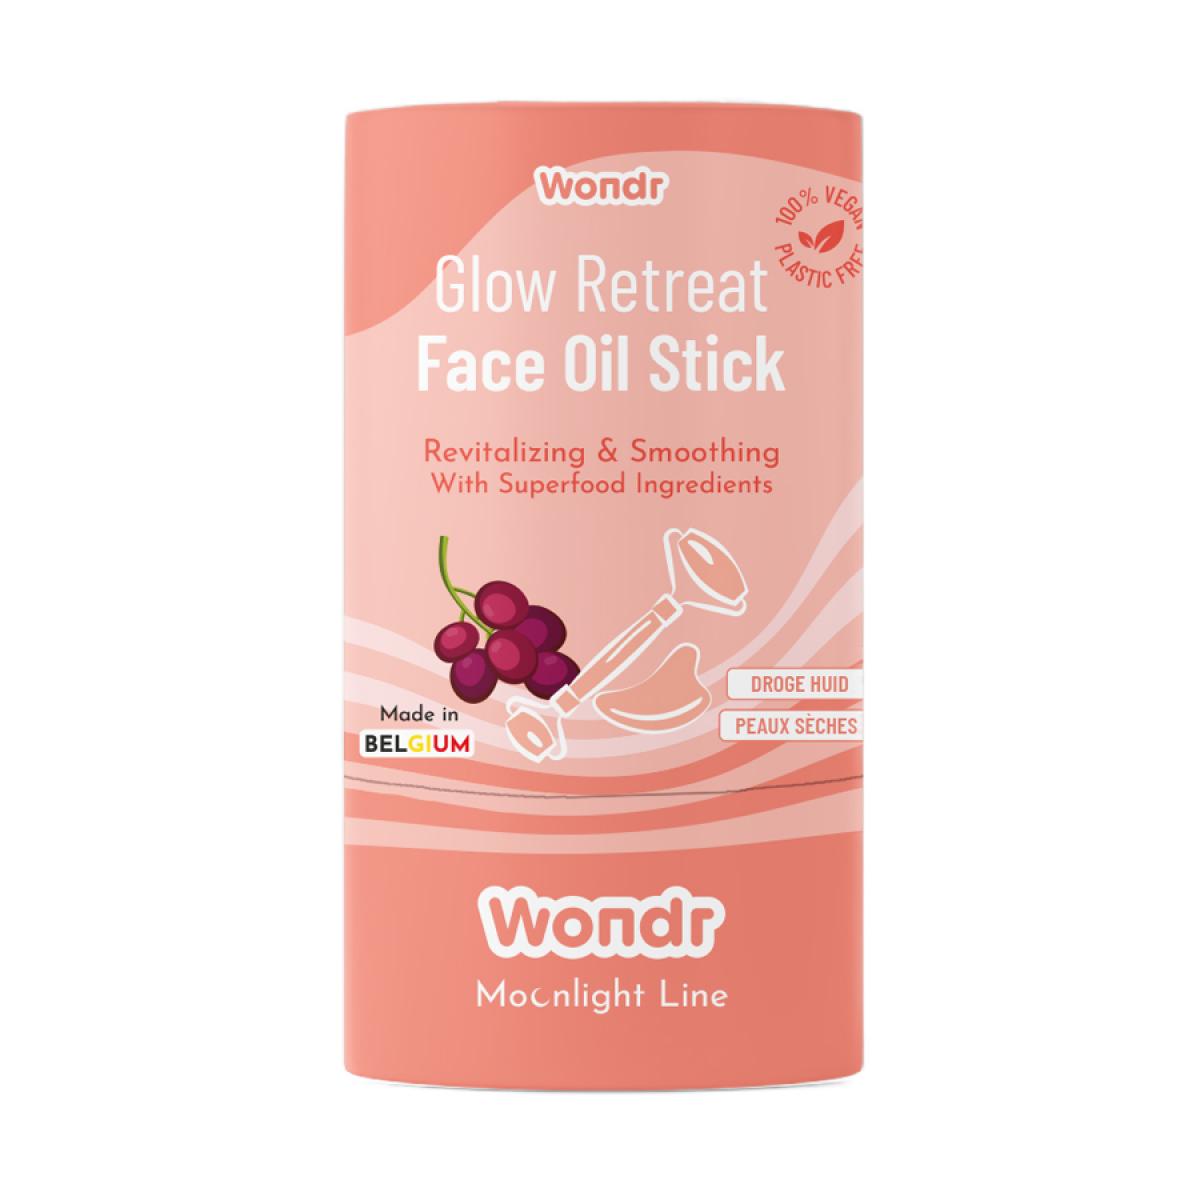 WONDR Glow Retreat Face Oil Stick (46 g)